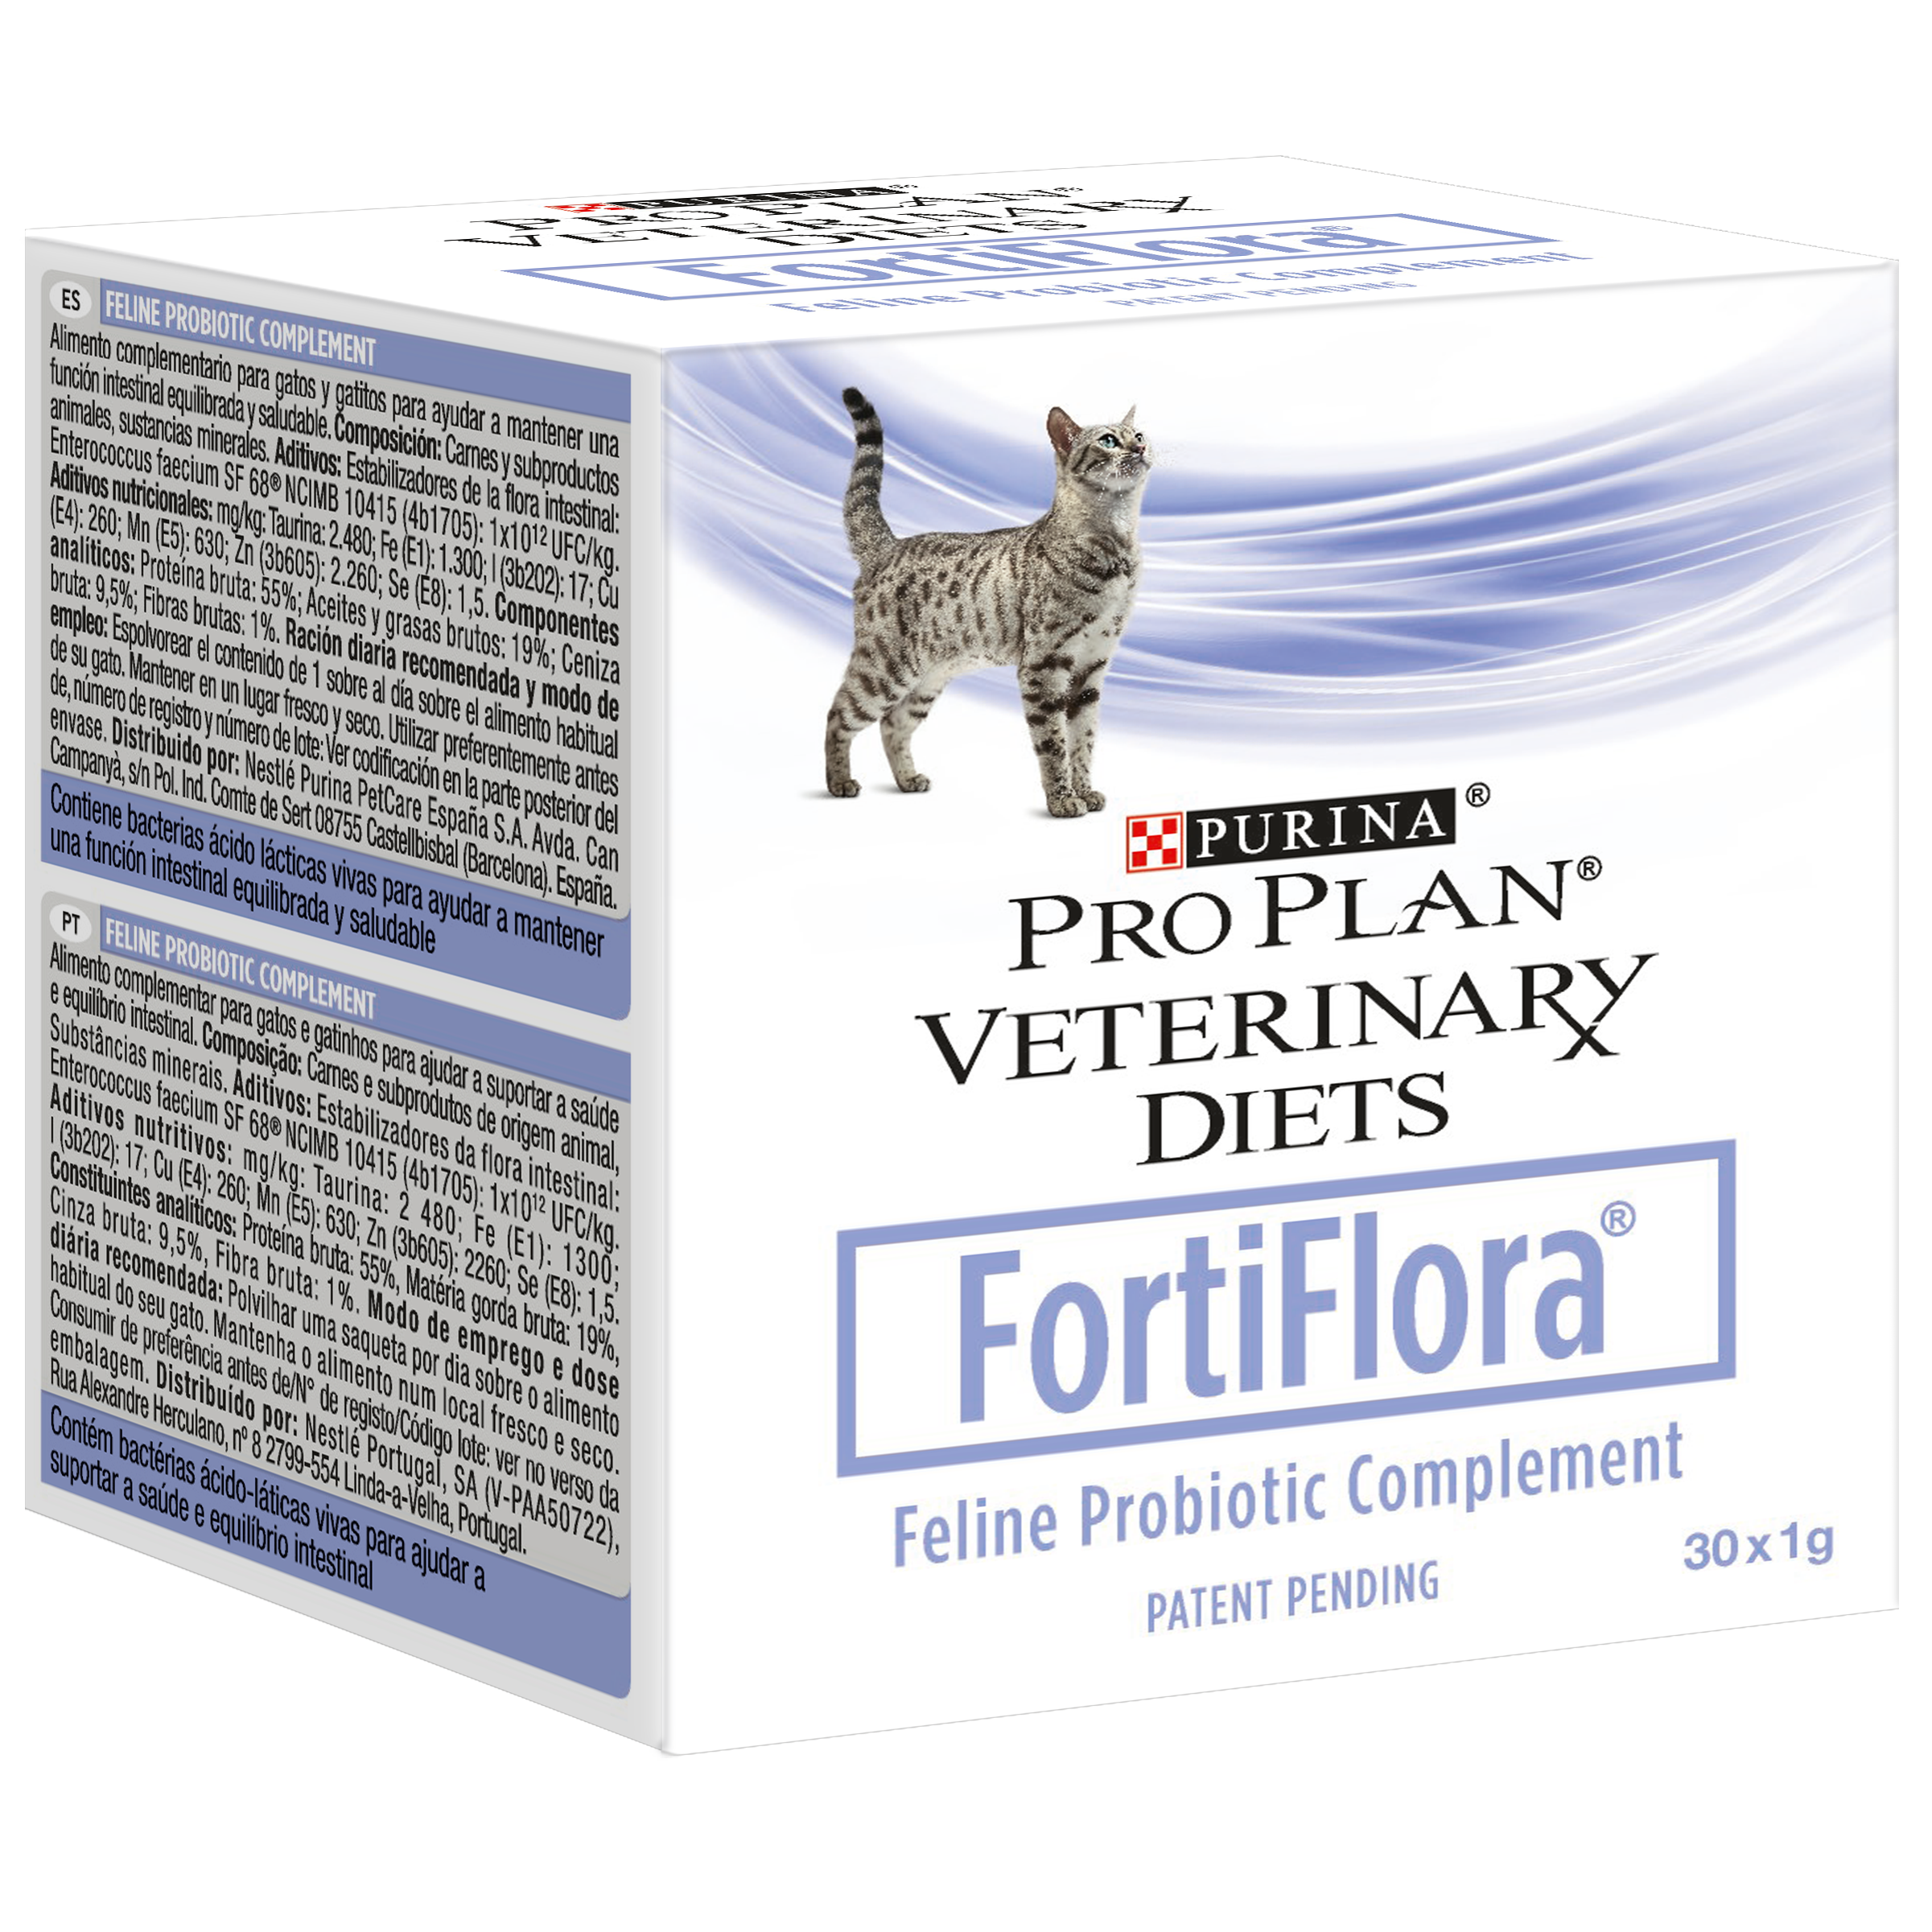 Фортифлора для собак цена. Purina Fortiflora пробиотик для кошек. Проплан пробиотик для собак фортифлора. Purina Pro Plan Fortiflora для собак. Purina Пурина Fortiflora фортифлора пробиотик.